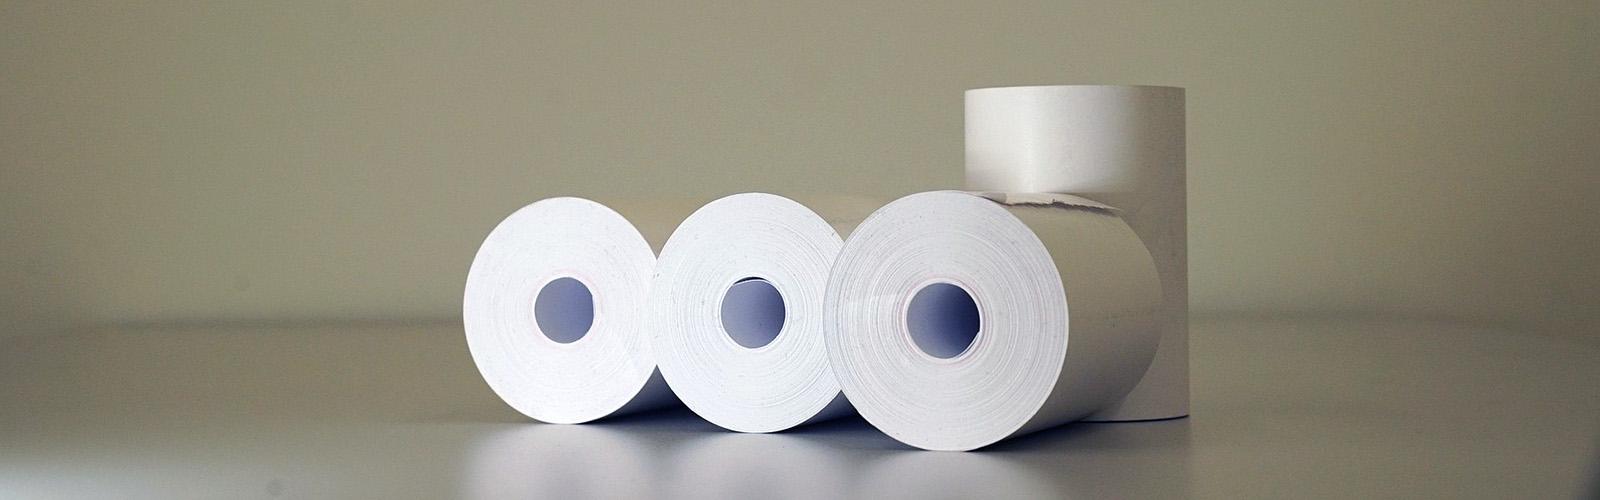 pos supply blog image - receipt paper rolls